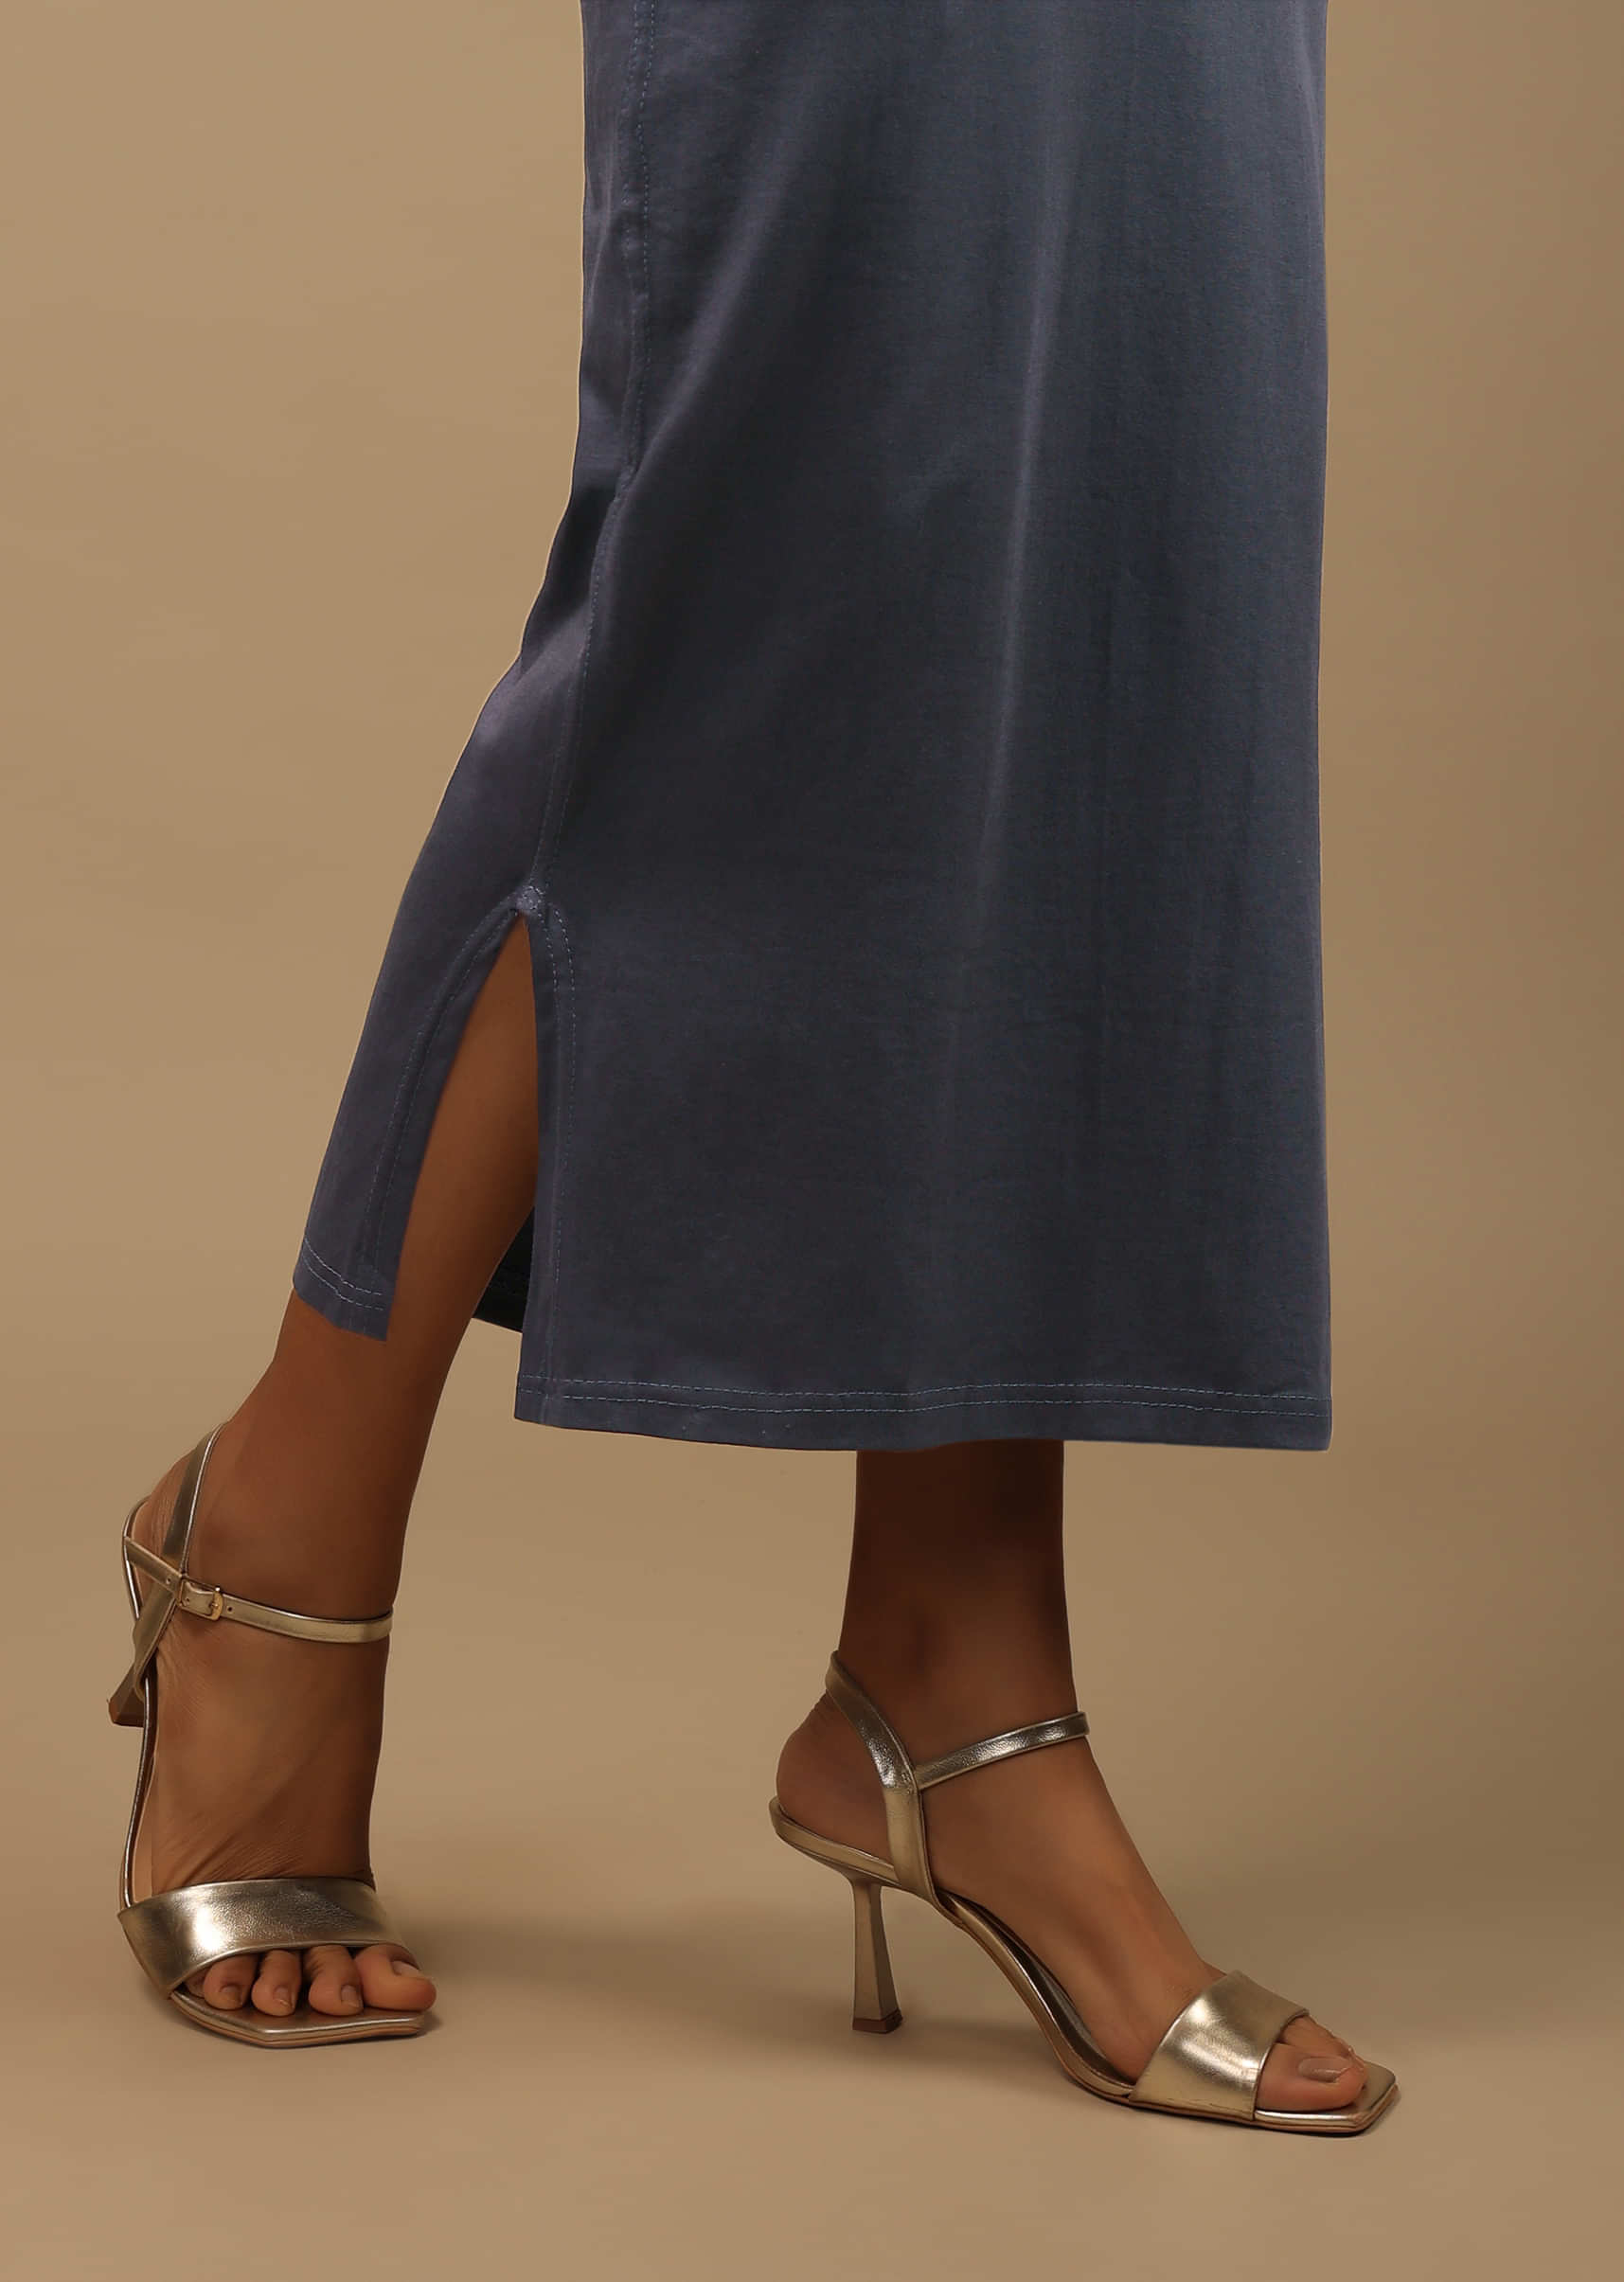 Buy JCSS Grey Cotton Saree Shapewear for Women Online @ Tata CLiQ